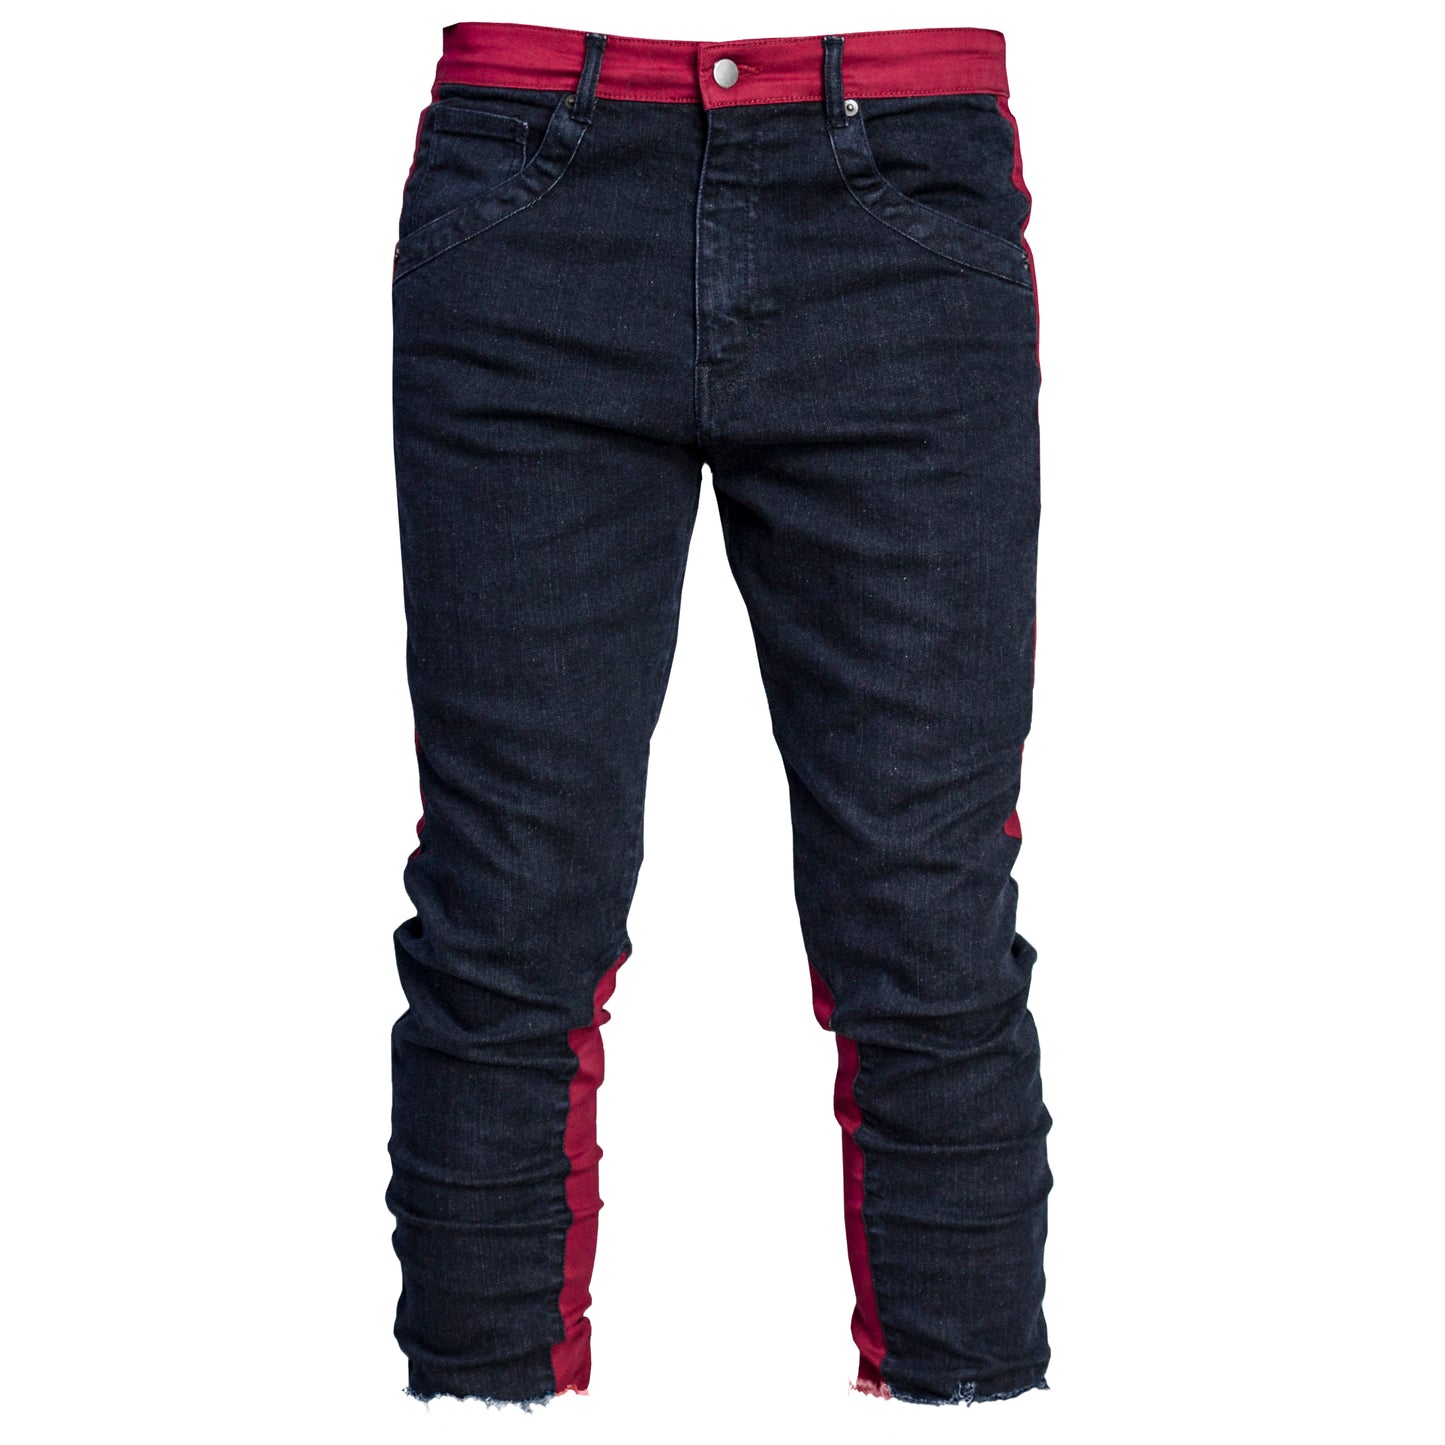 Cropped Spear Jeans : Indigo/Crimson